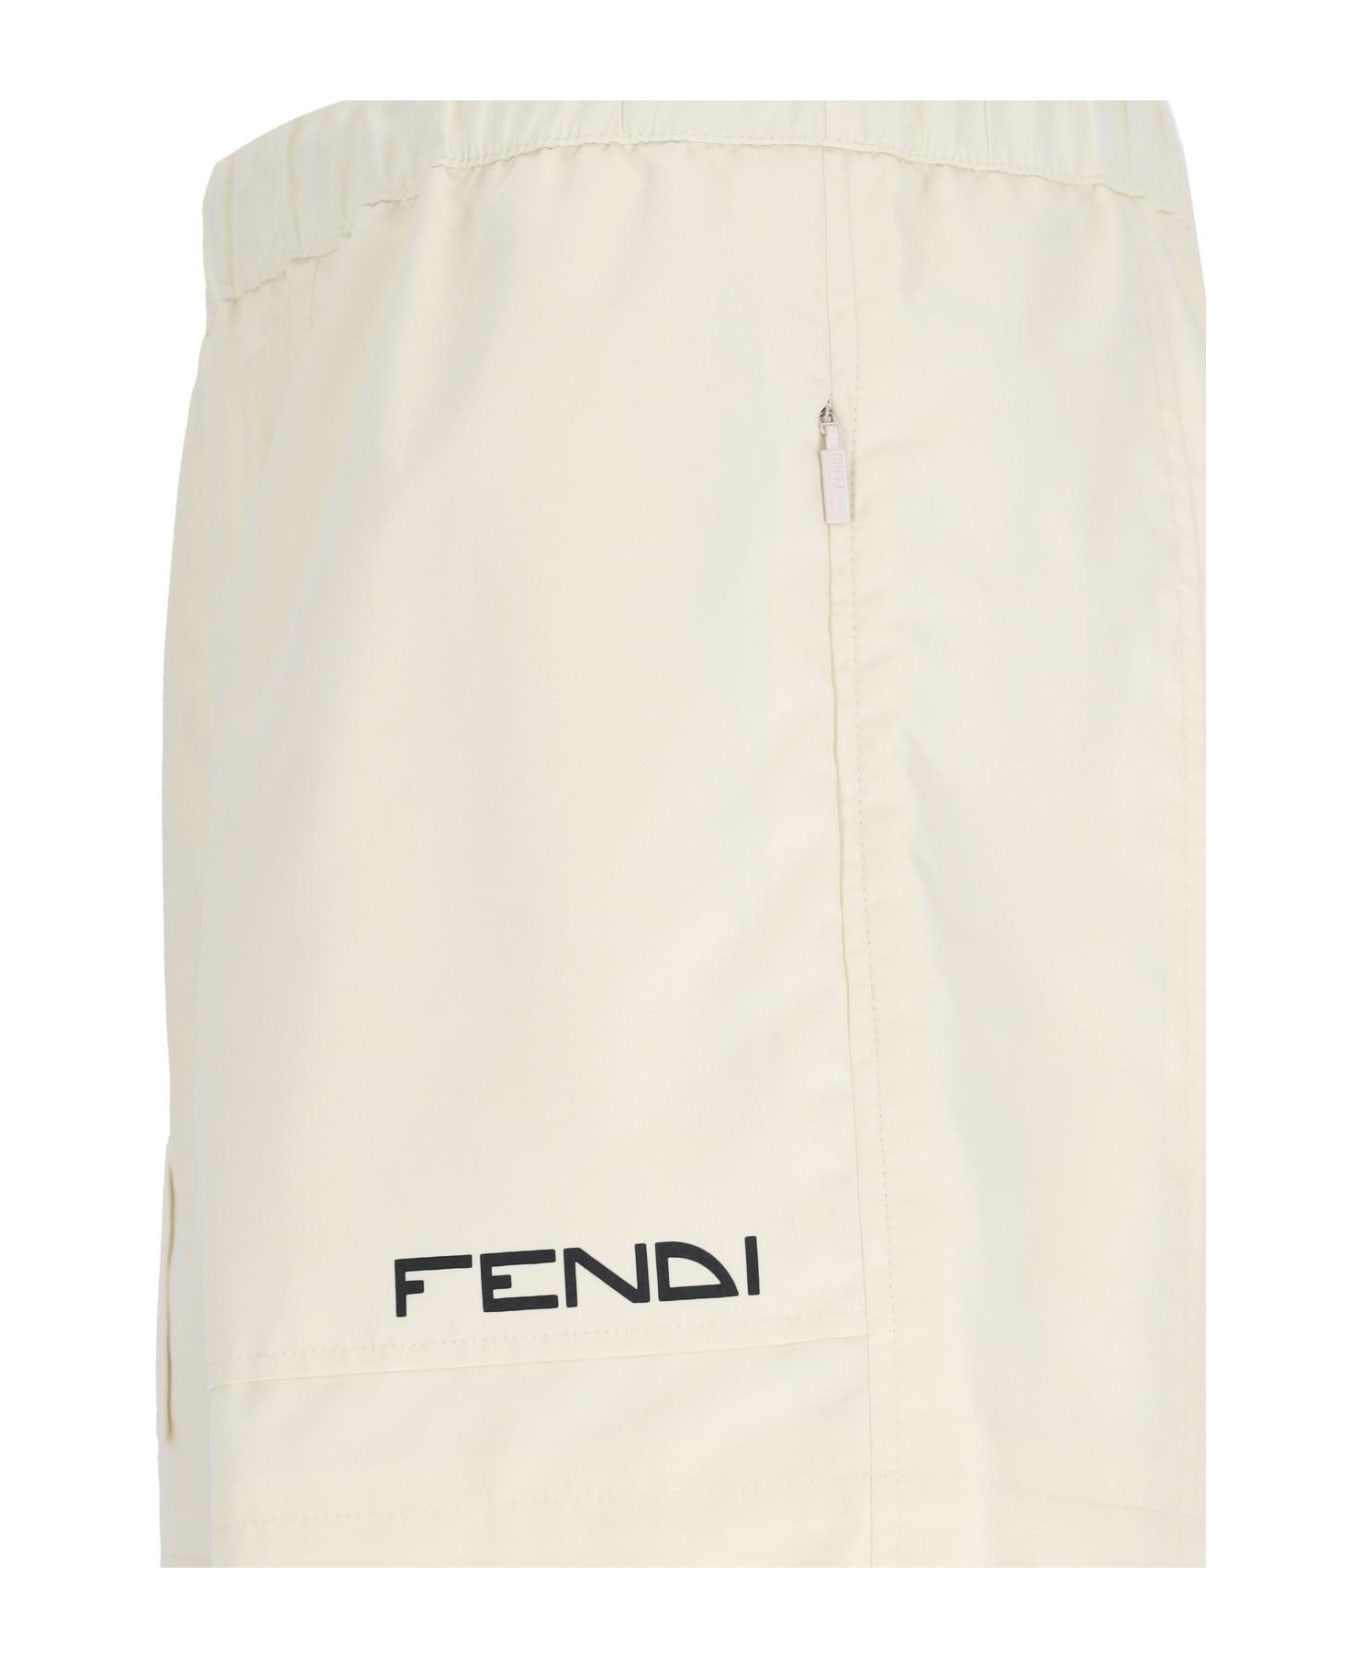 Fendi Logo Track Shorts - Beige ショートパンツ